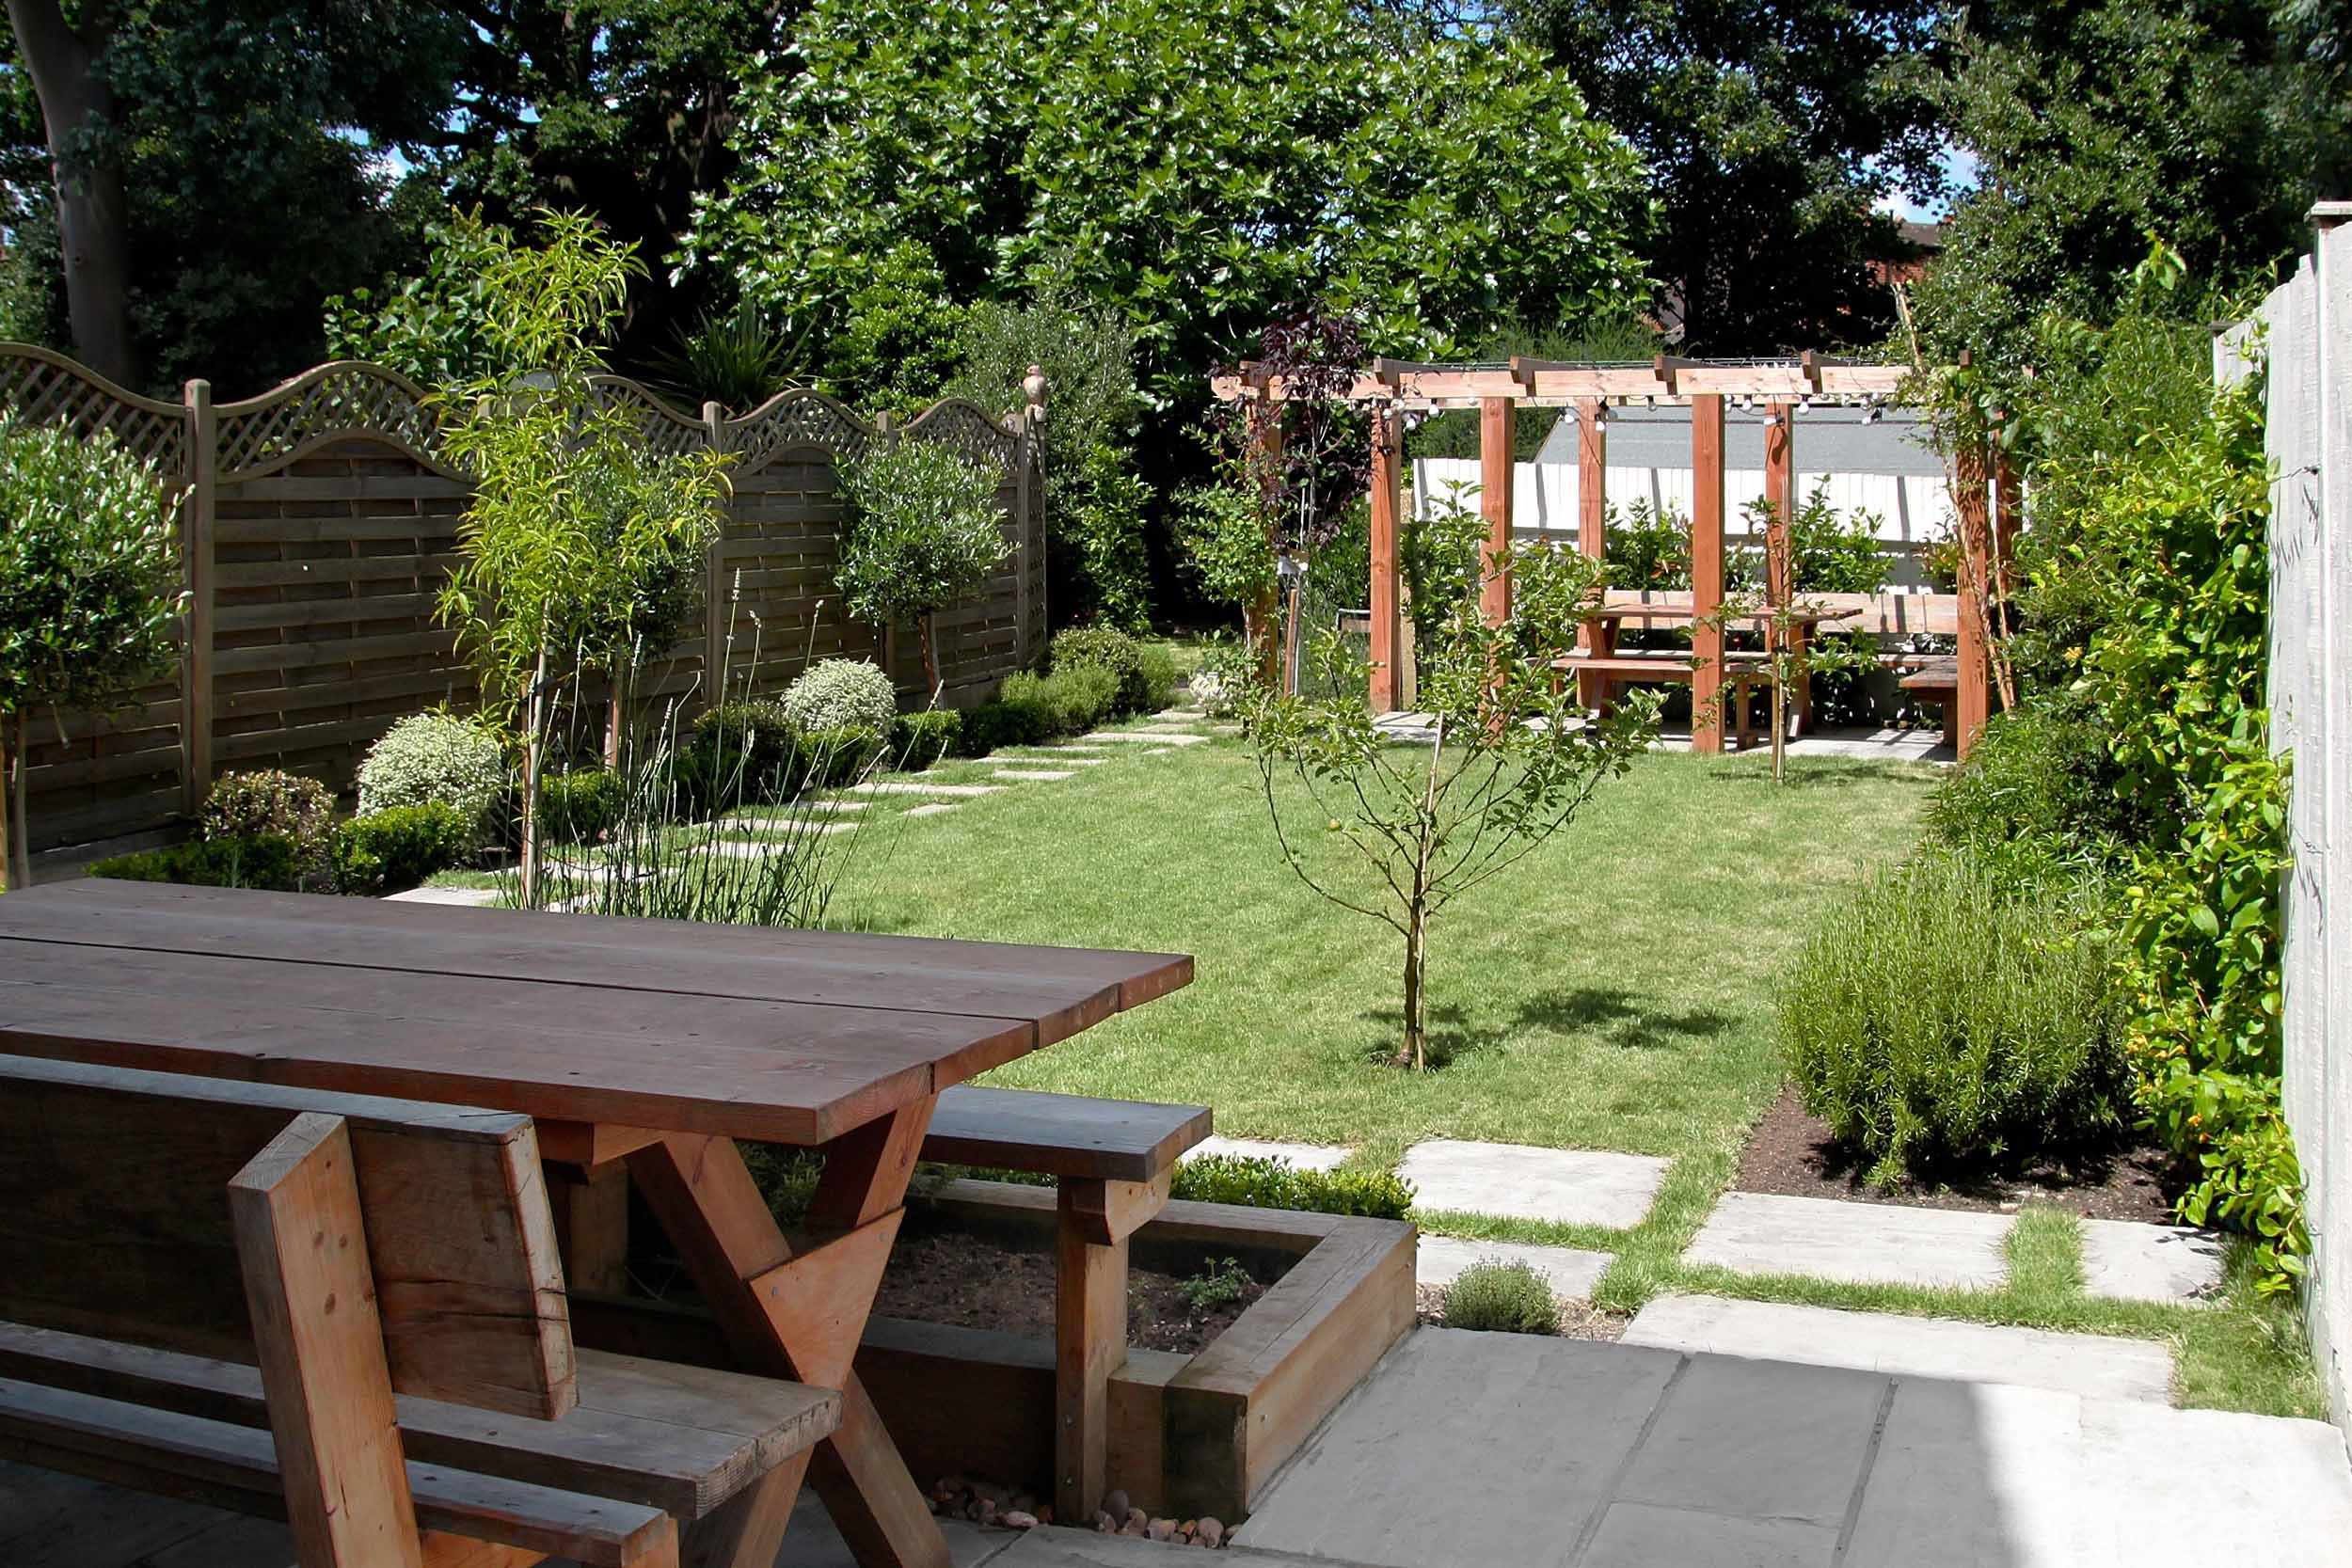 Reclaimed timber garden furniture, timber pergola. Garden design &amp; build near Farnham, Surrey